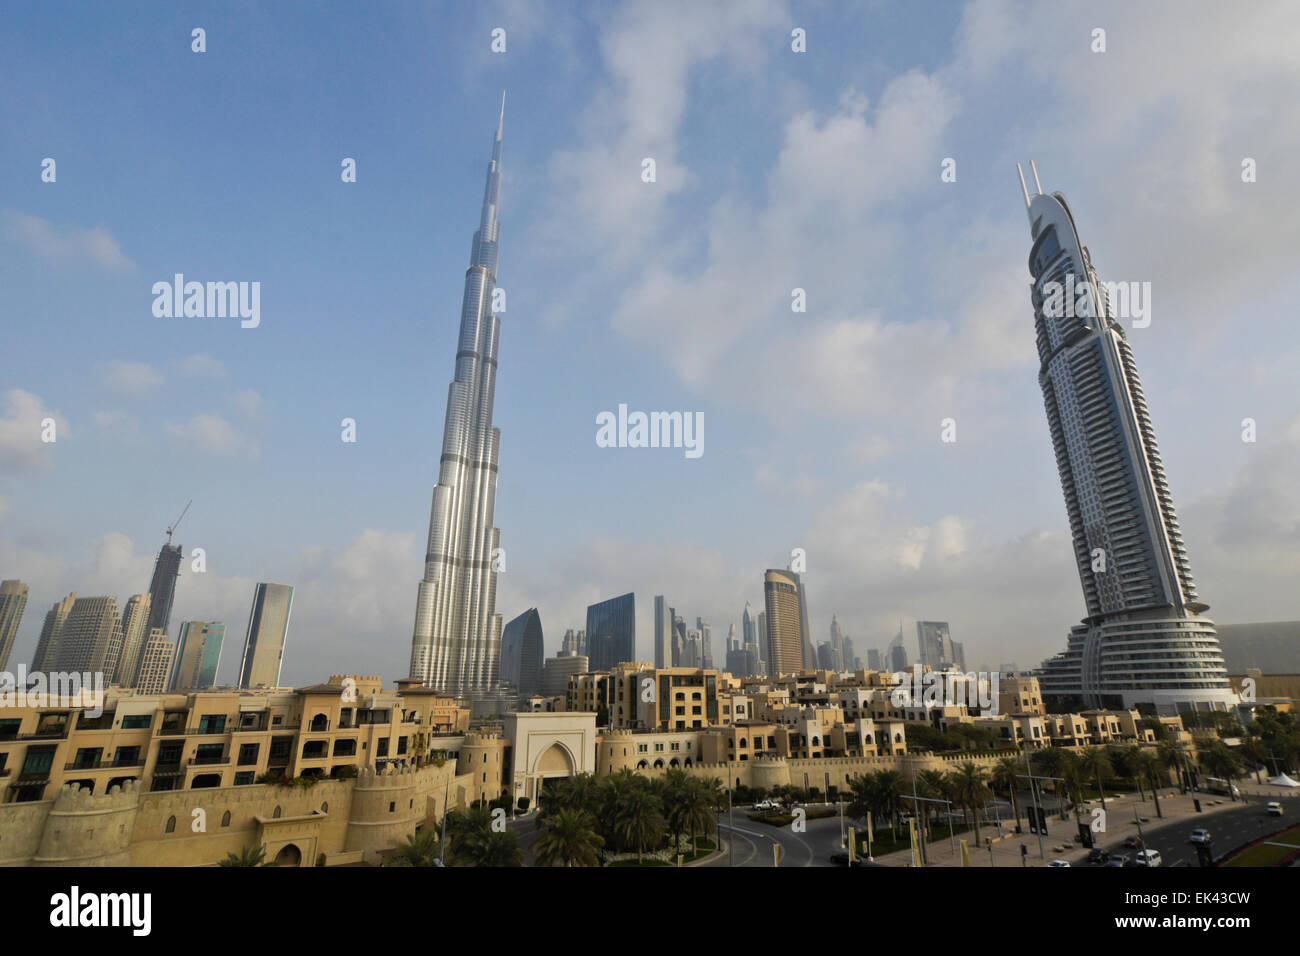 Burj Khalifa (tower on left), The Address (tower on right), and skyline of Dubai, United Arab Emirates Stock Photo